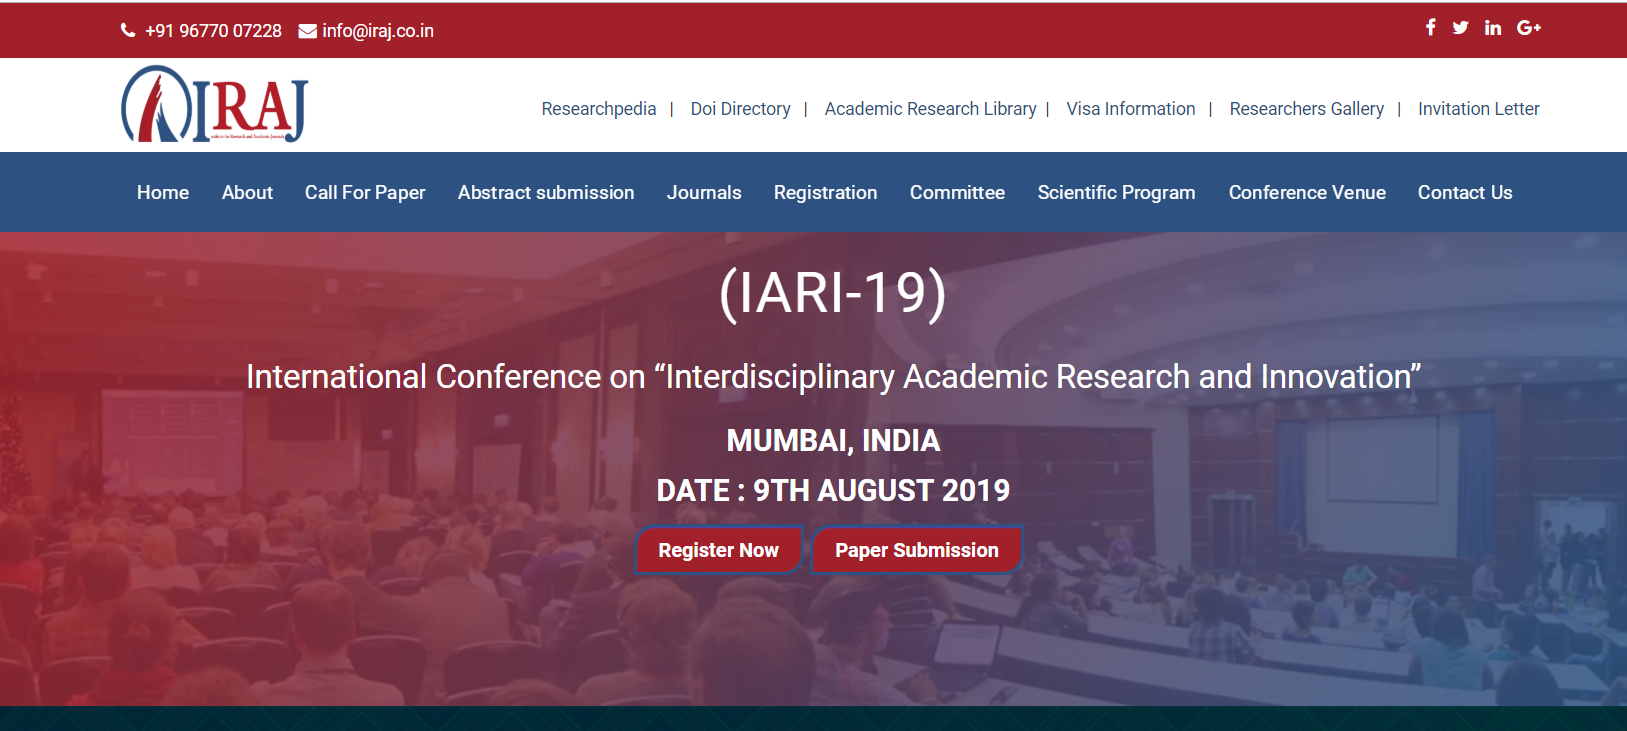 International Conference on “Interdisciplinary Academic Research and Innovation” (IARI-19), Mumbai, Maharashtra, India